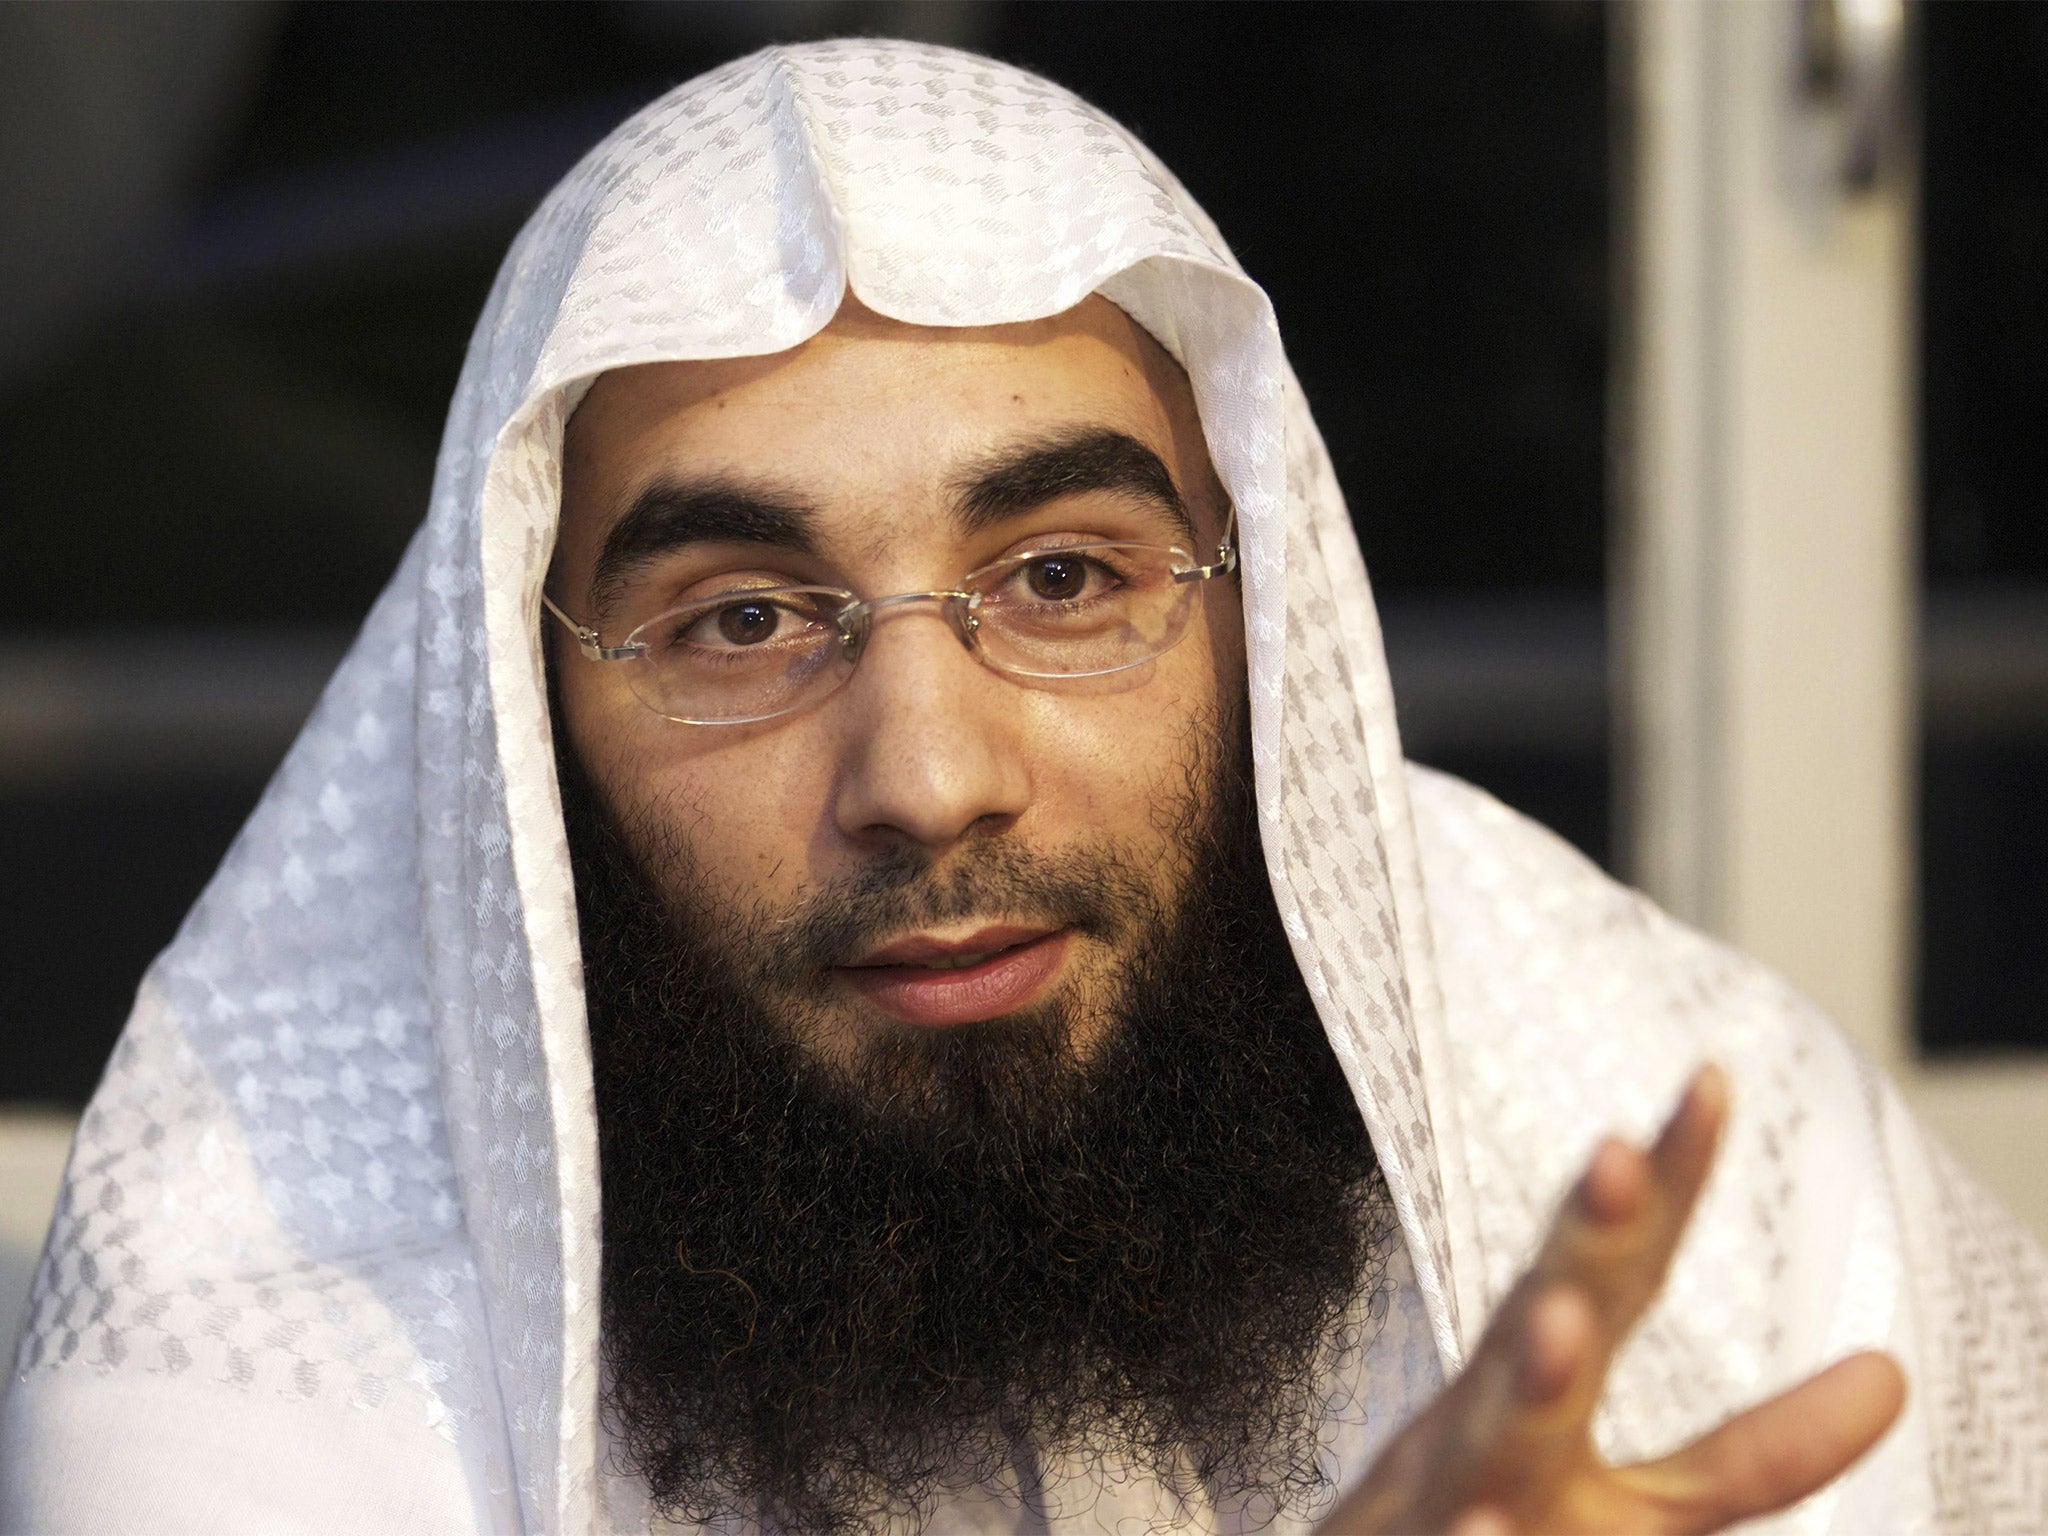 'Sharia4Belgium' leader Fouad Belkacem, in 2012